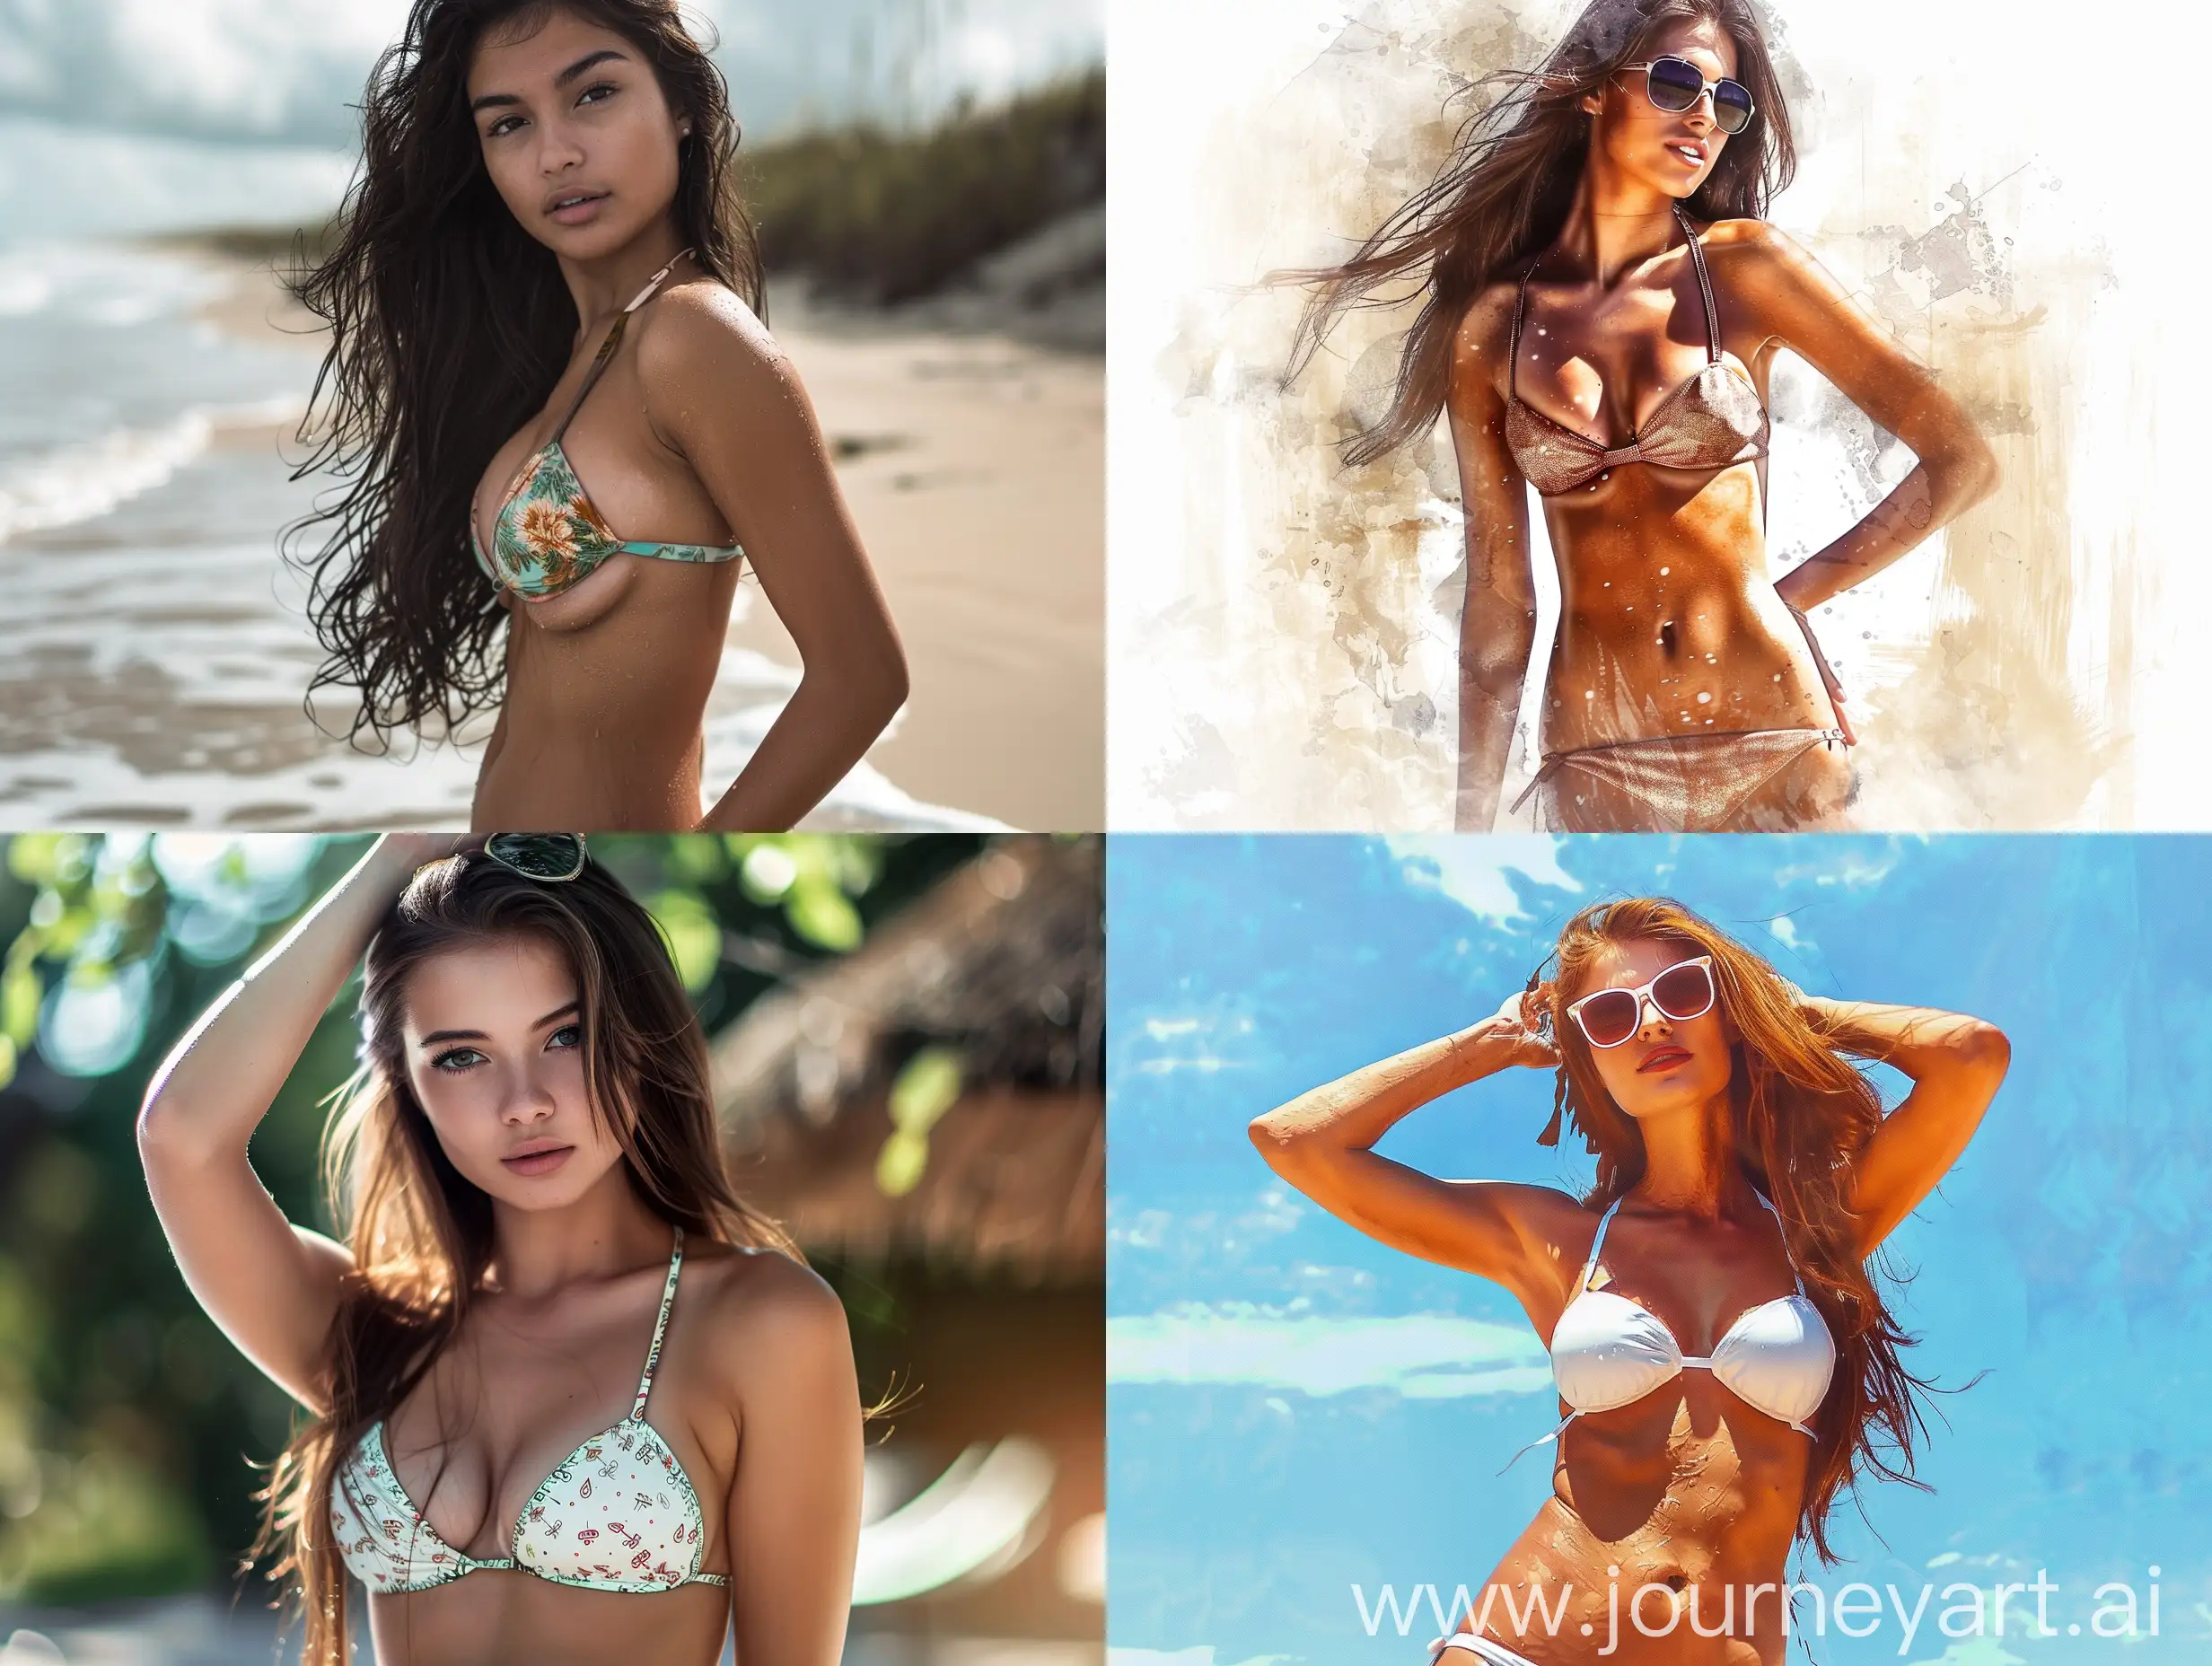 Make a beautifull picture of a bikini model